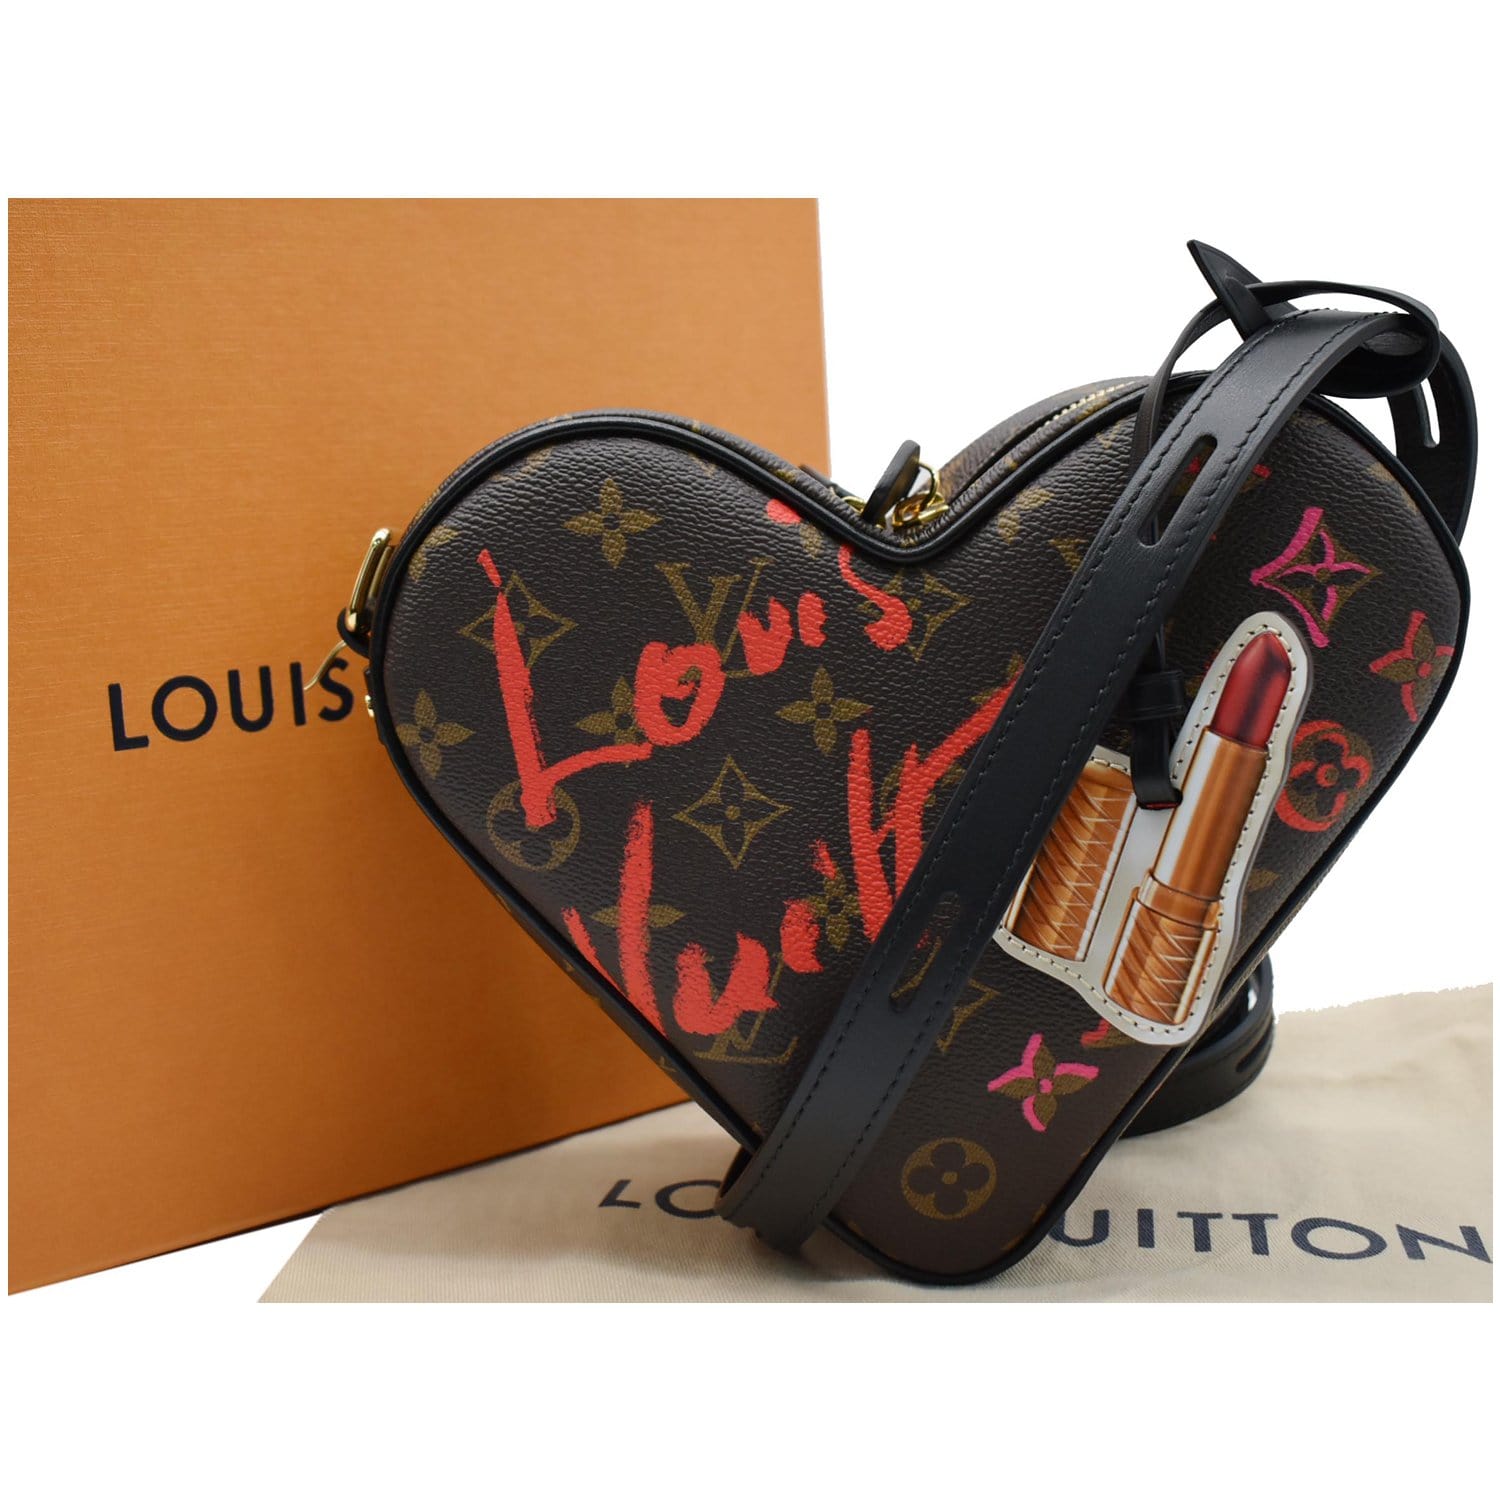 Louis Vuitton heart shaped bag  Heart shaped bag, Bags, Louis vuitton